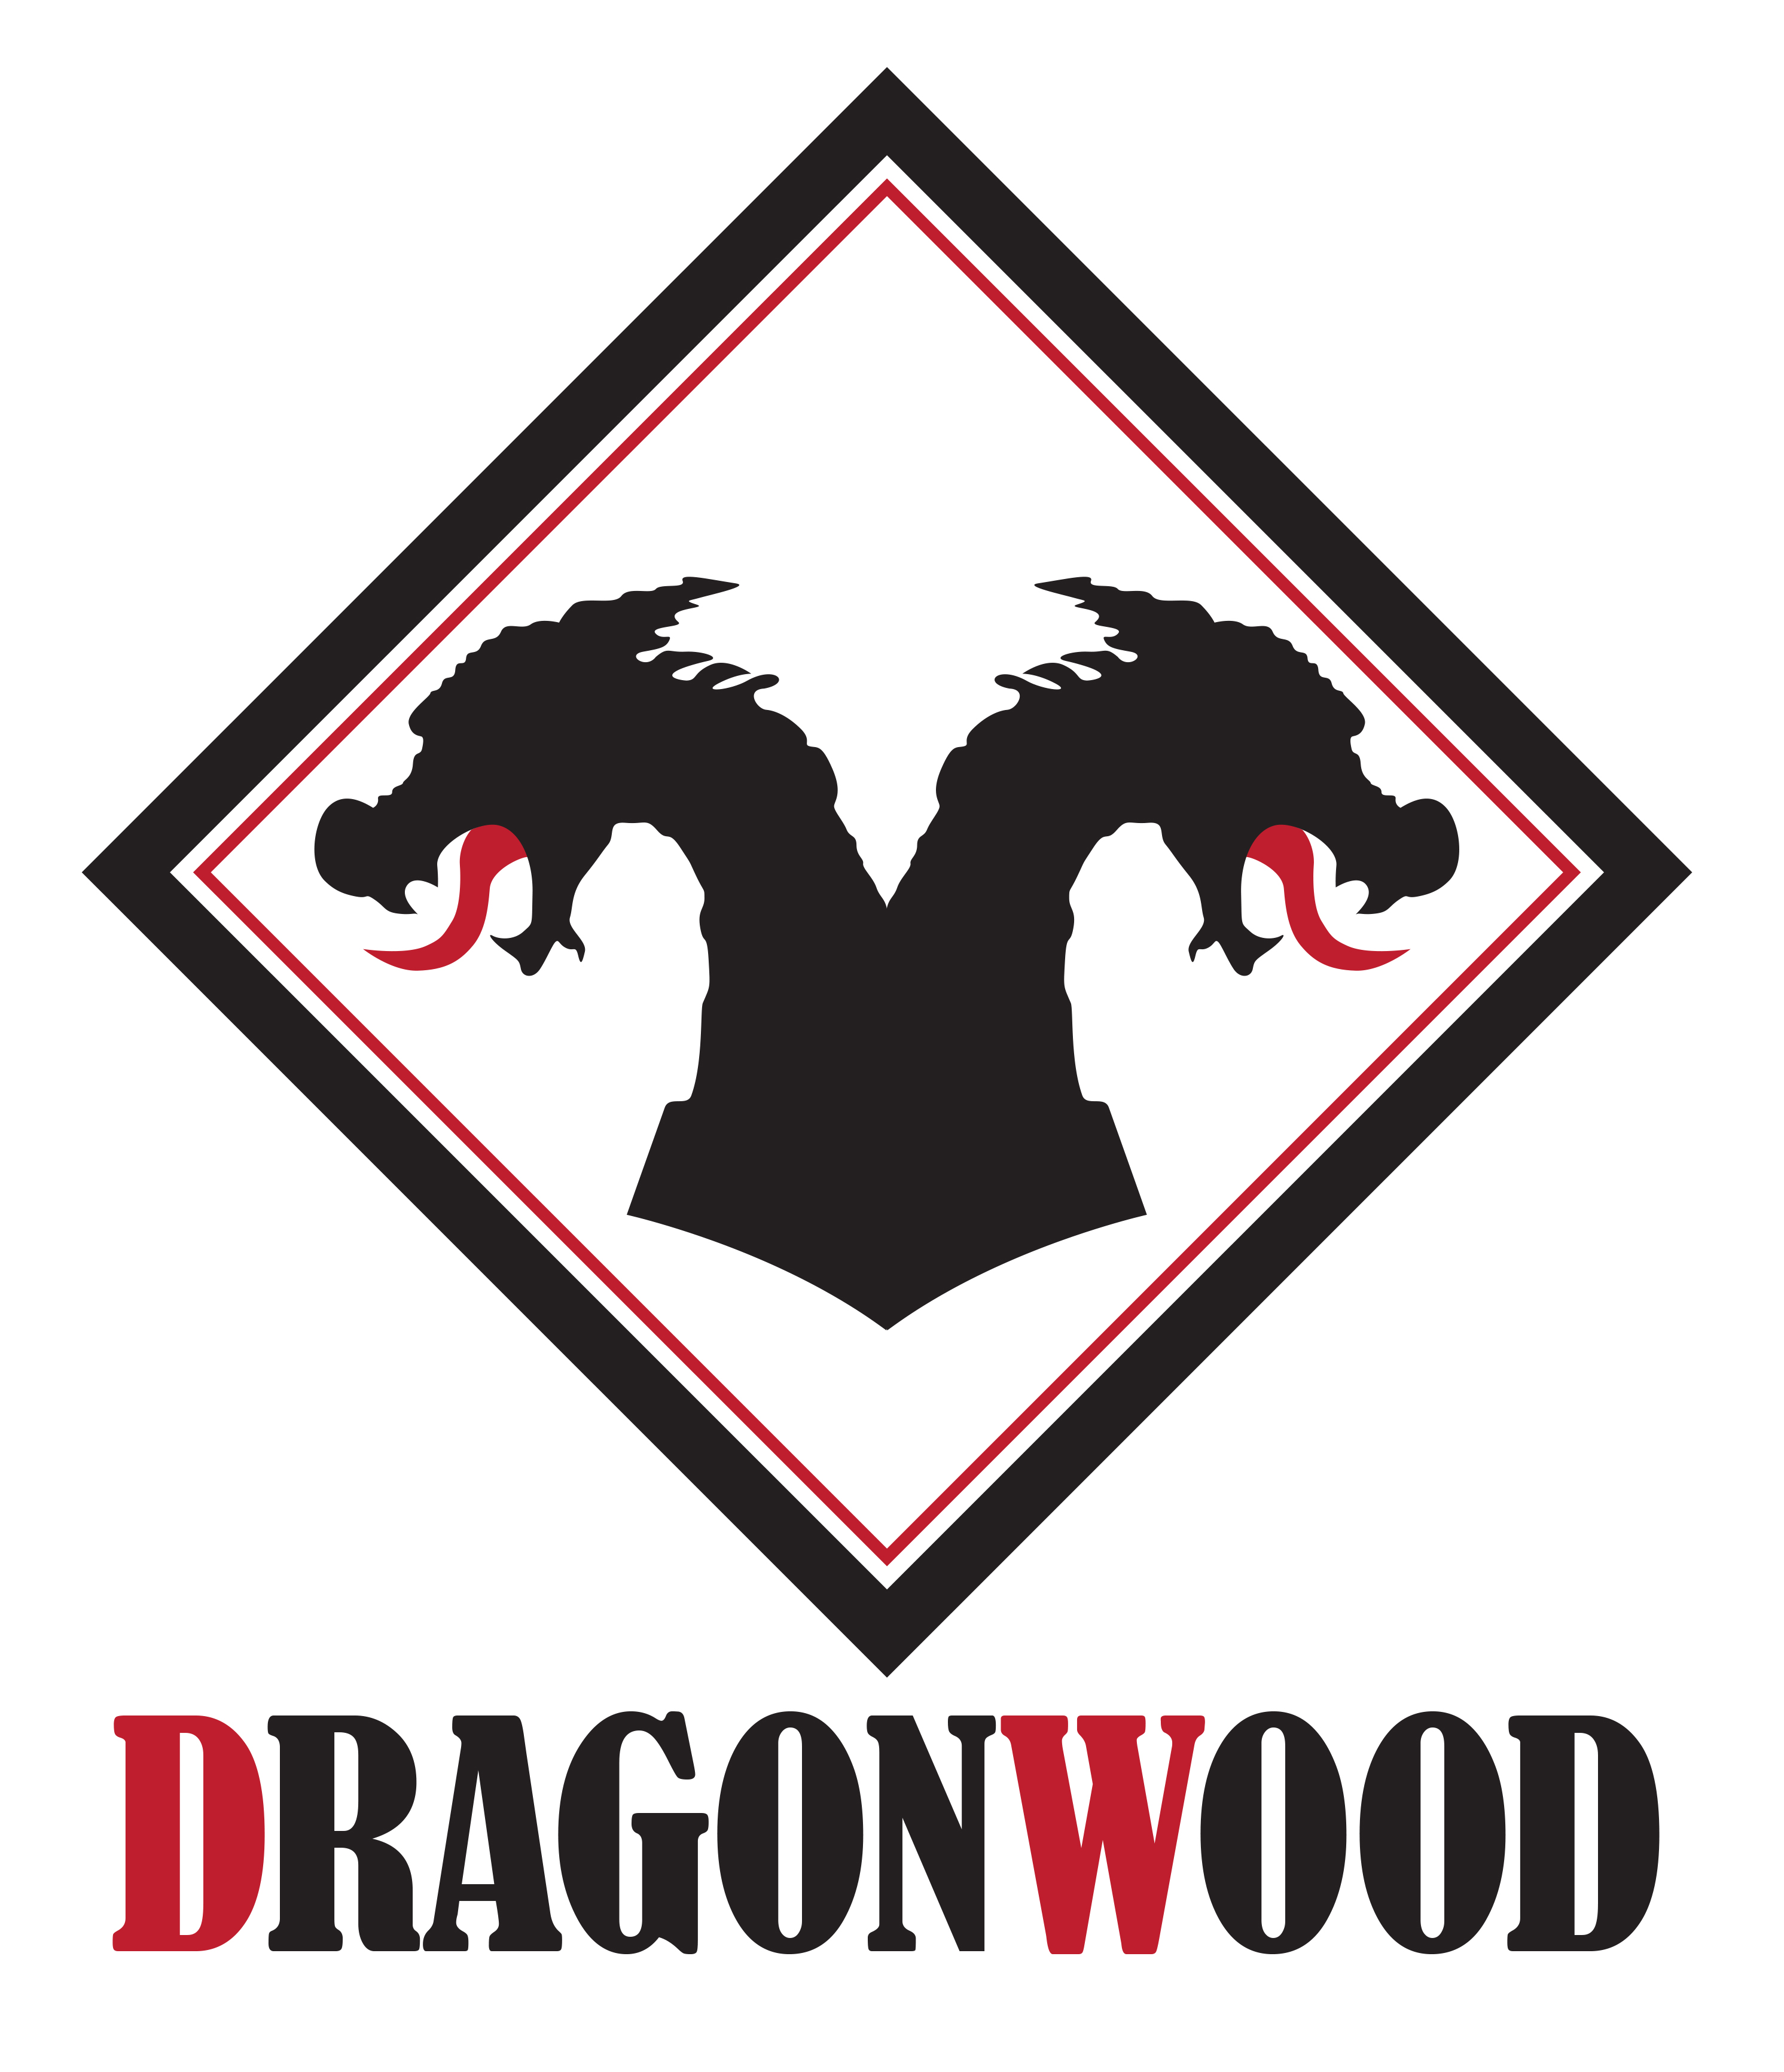 Dragonwood and Cutek Extreme